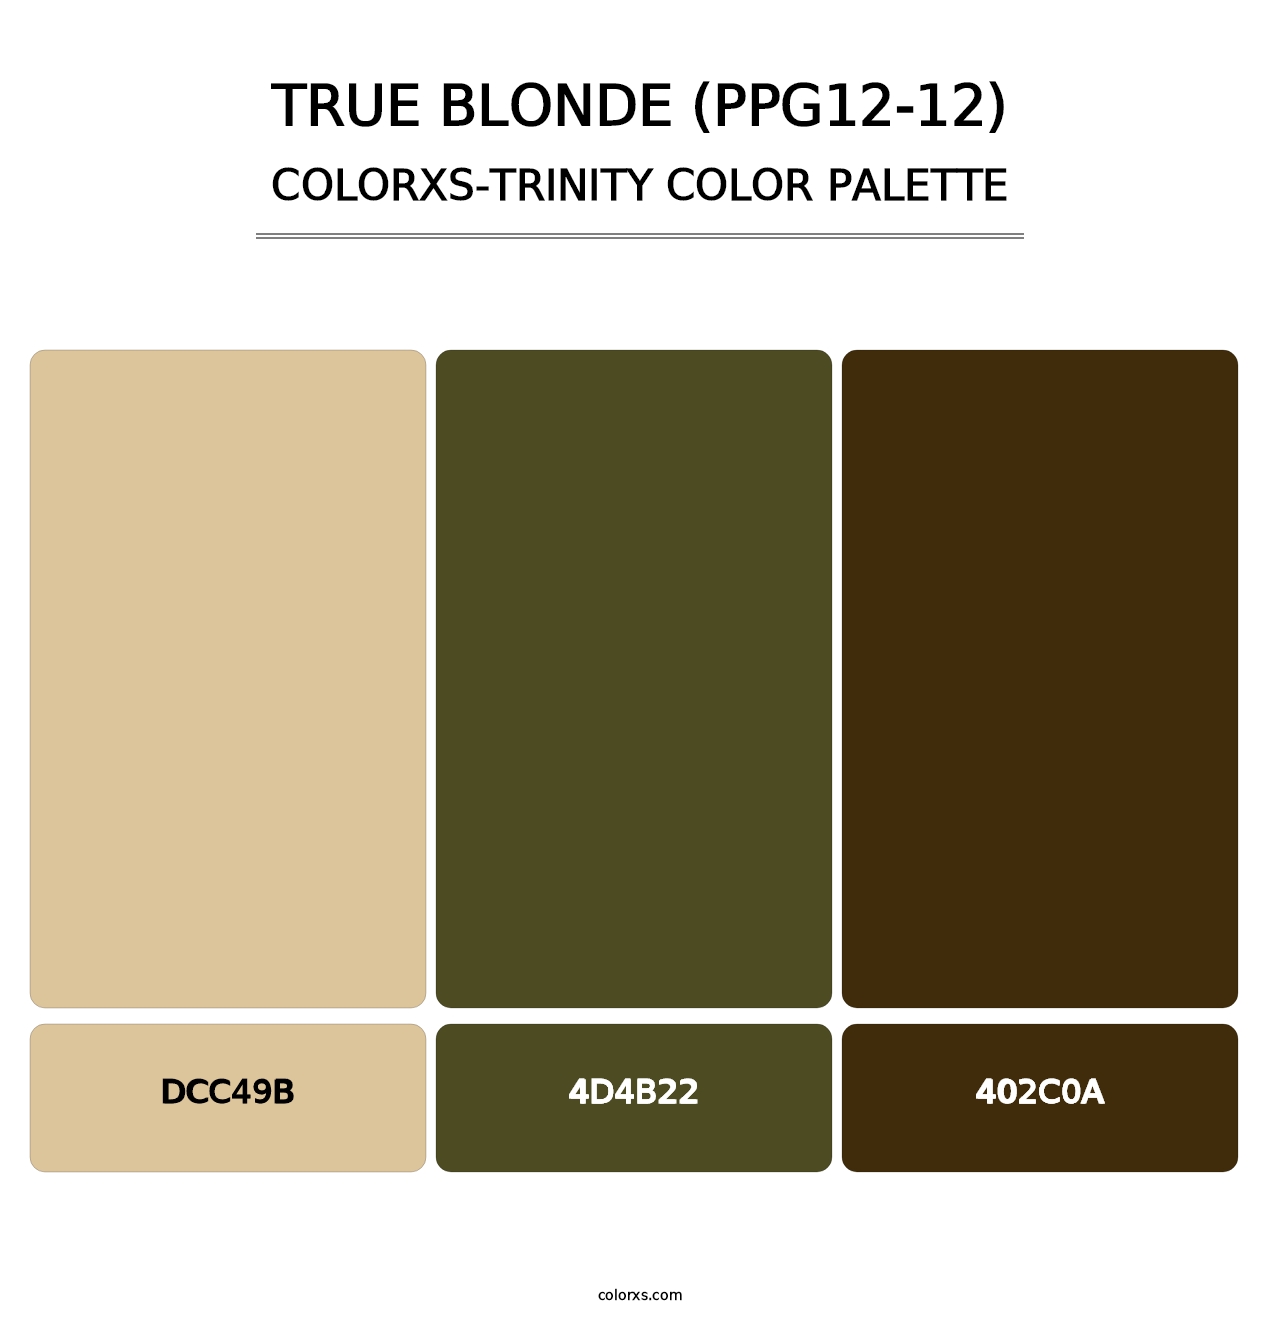 True Blonde (PPG12-12) - Colorxs Trinity Palette